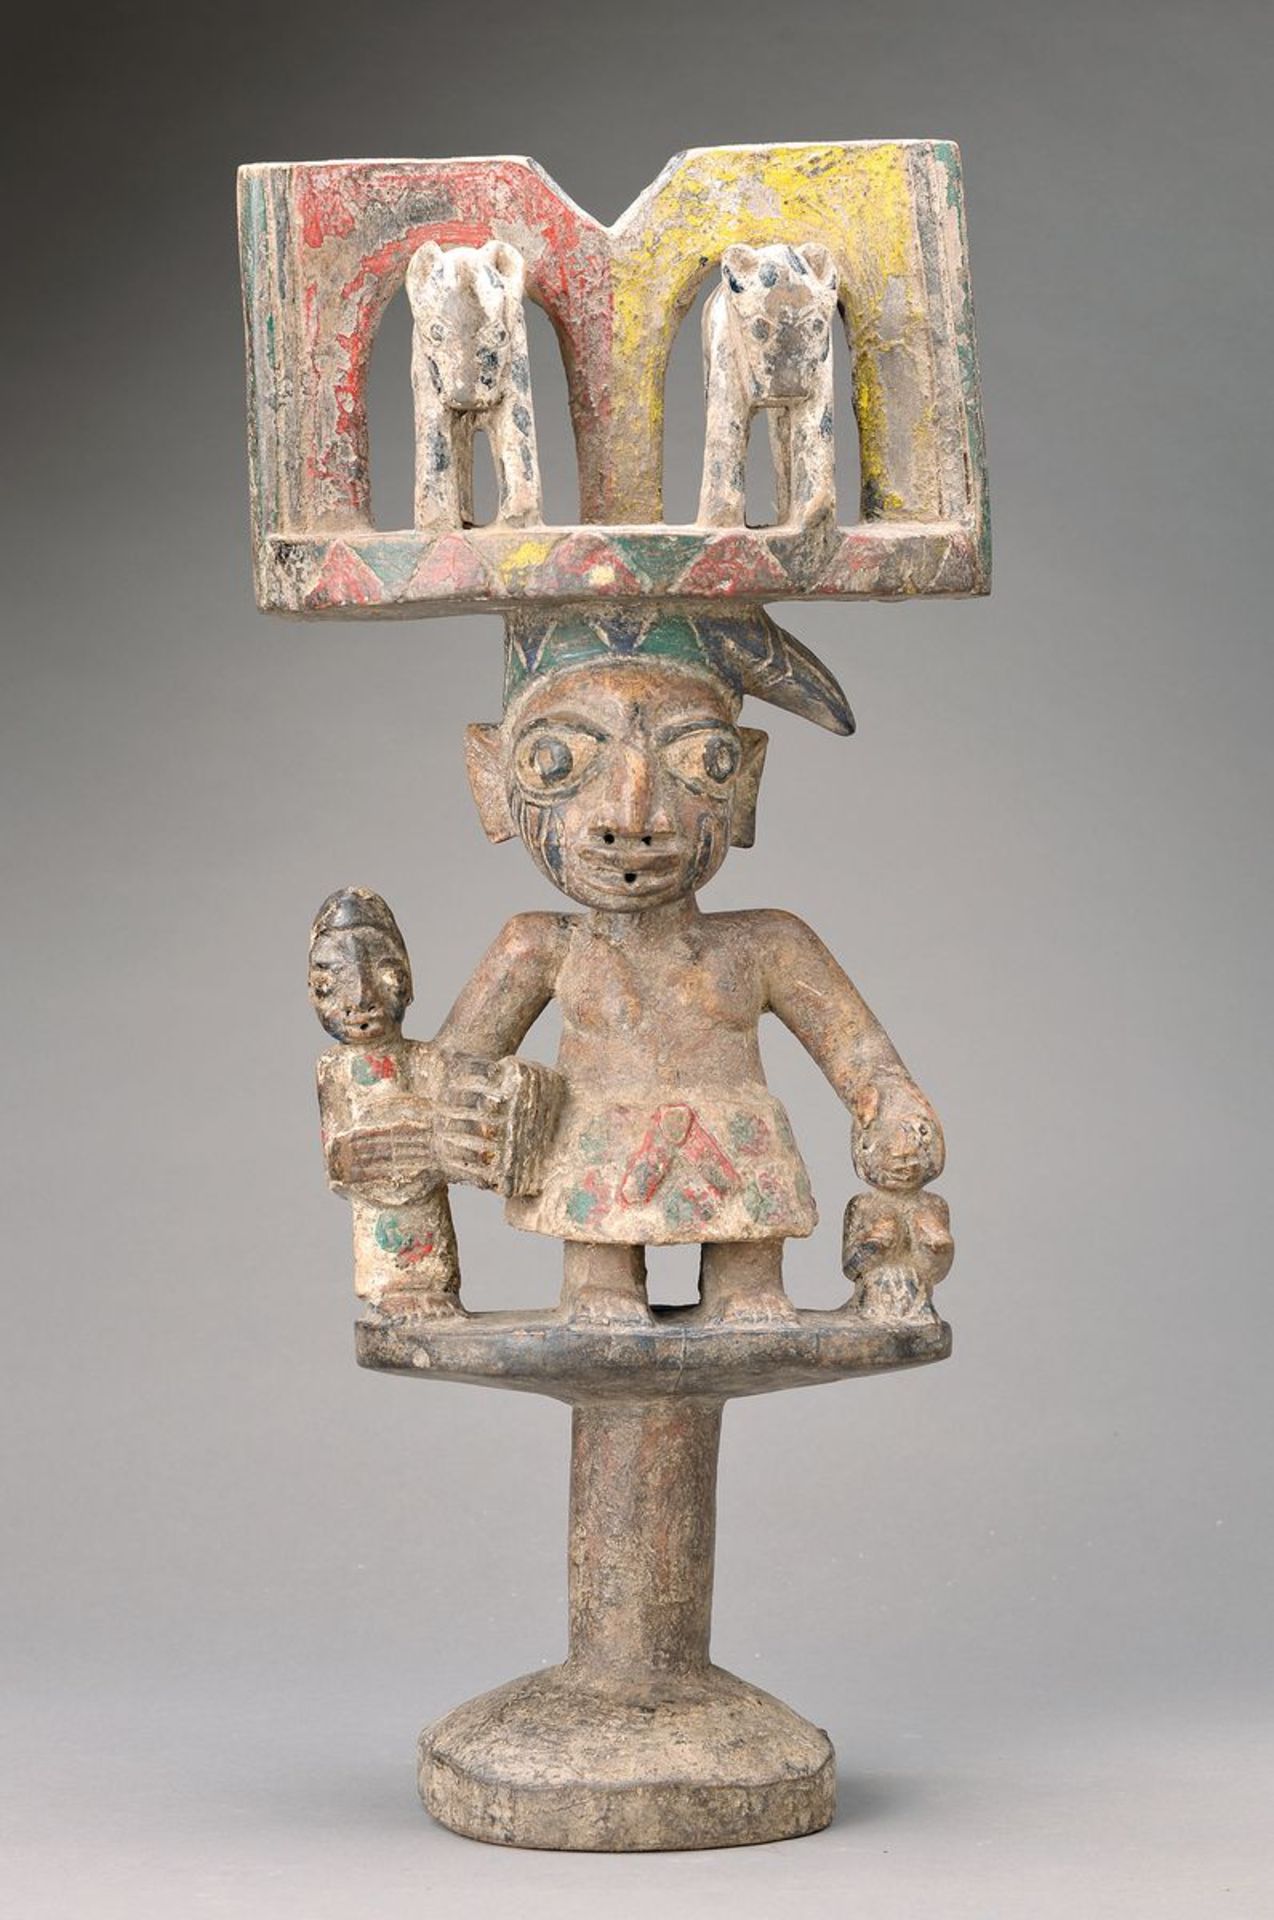 Skulptur mit Kinderfiguren u. Tier-Bekrönung, Nigeria, ca. 40-50 Jahre alt, Hartholz aus einem Stück